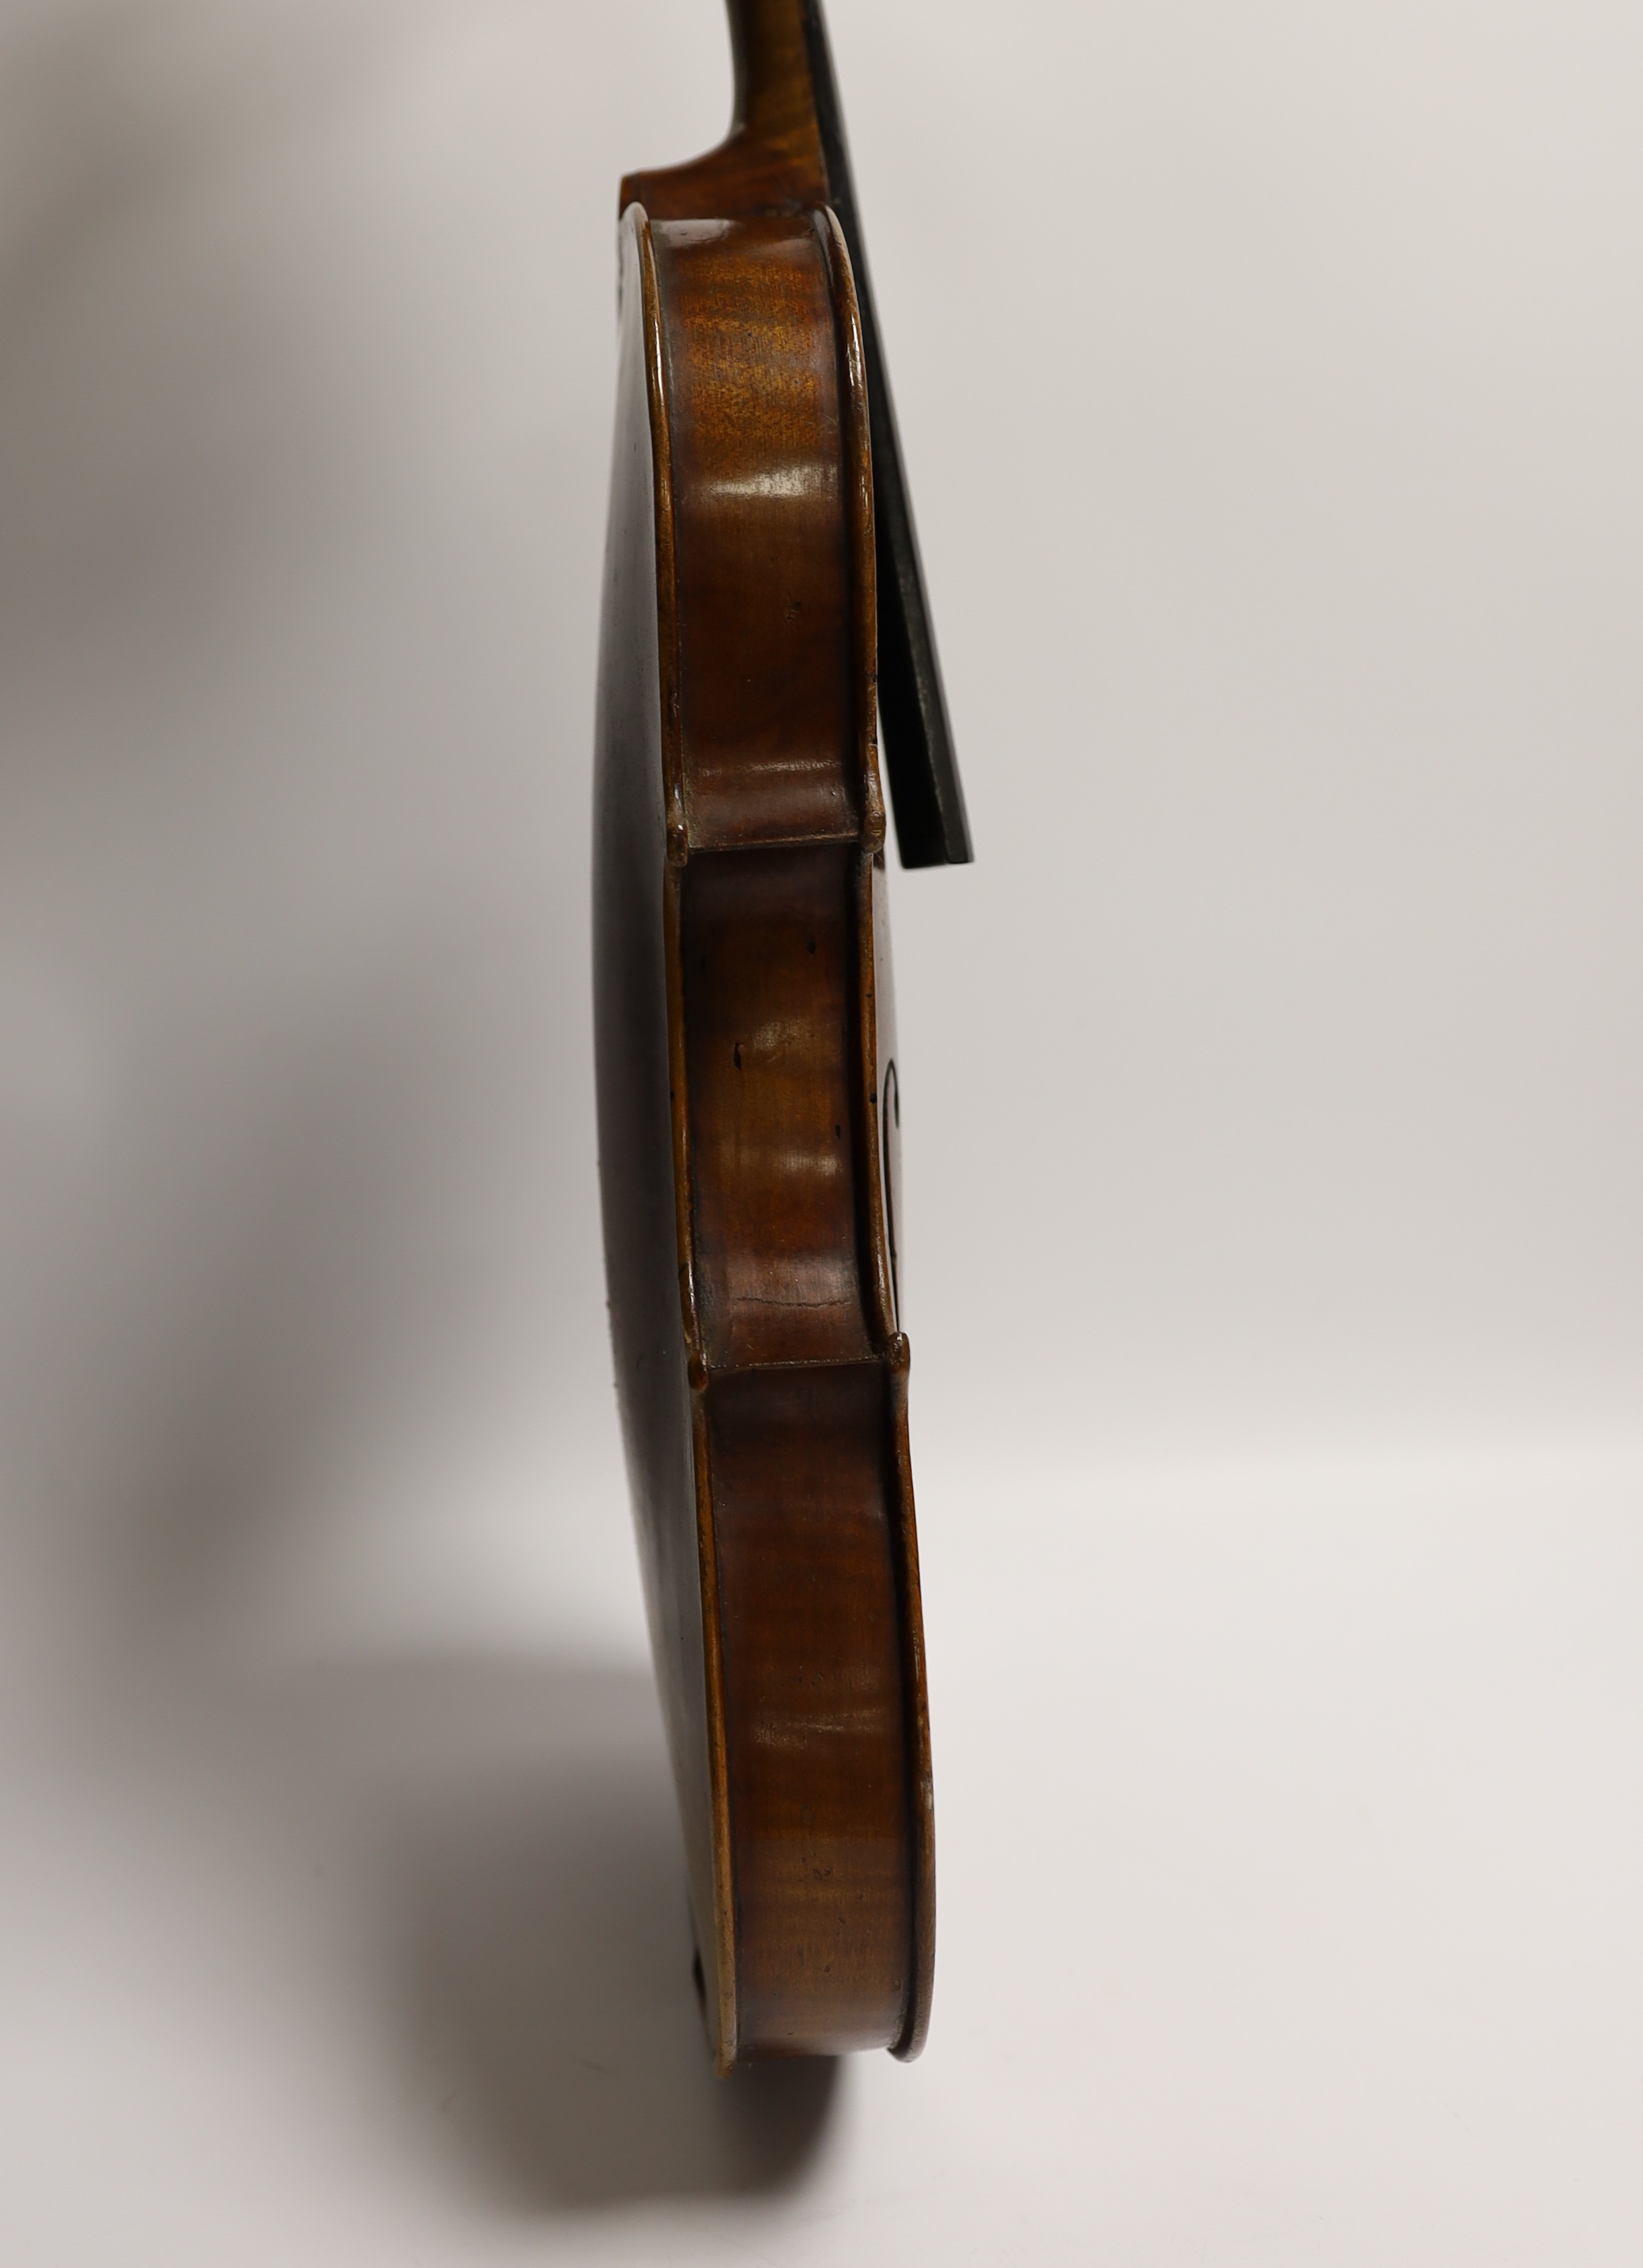 A German Stradivarius style violin, late 19th century, cased